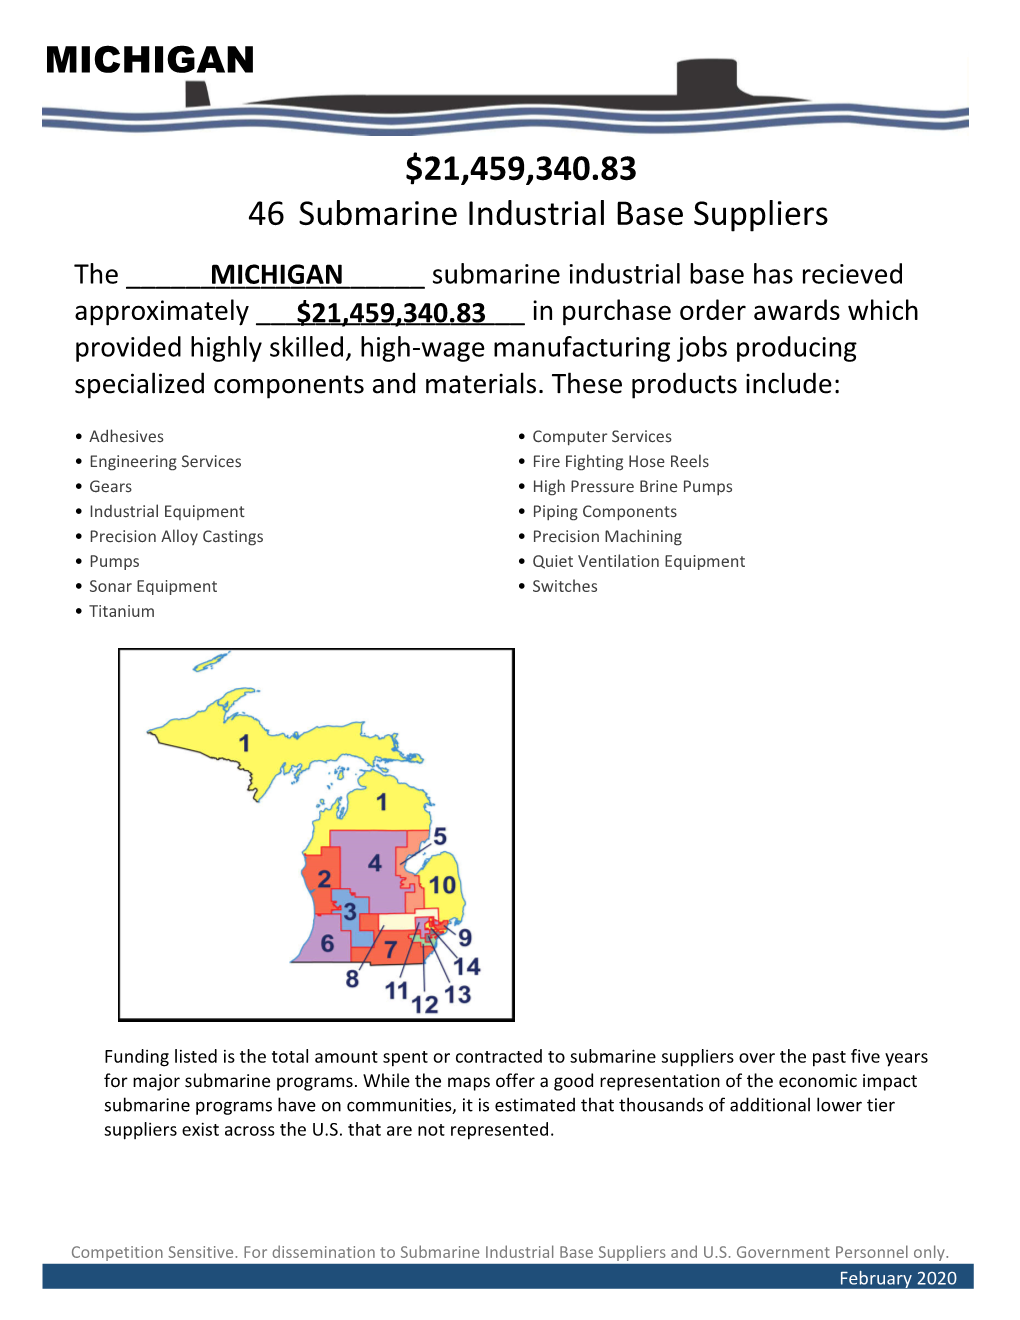 MICHIGAN 46 $21,459,340.83 Submarine Industrial Base Suppliers